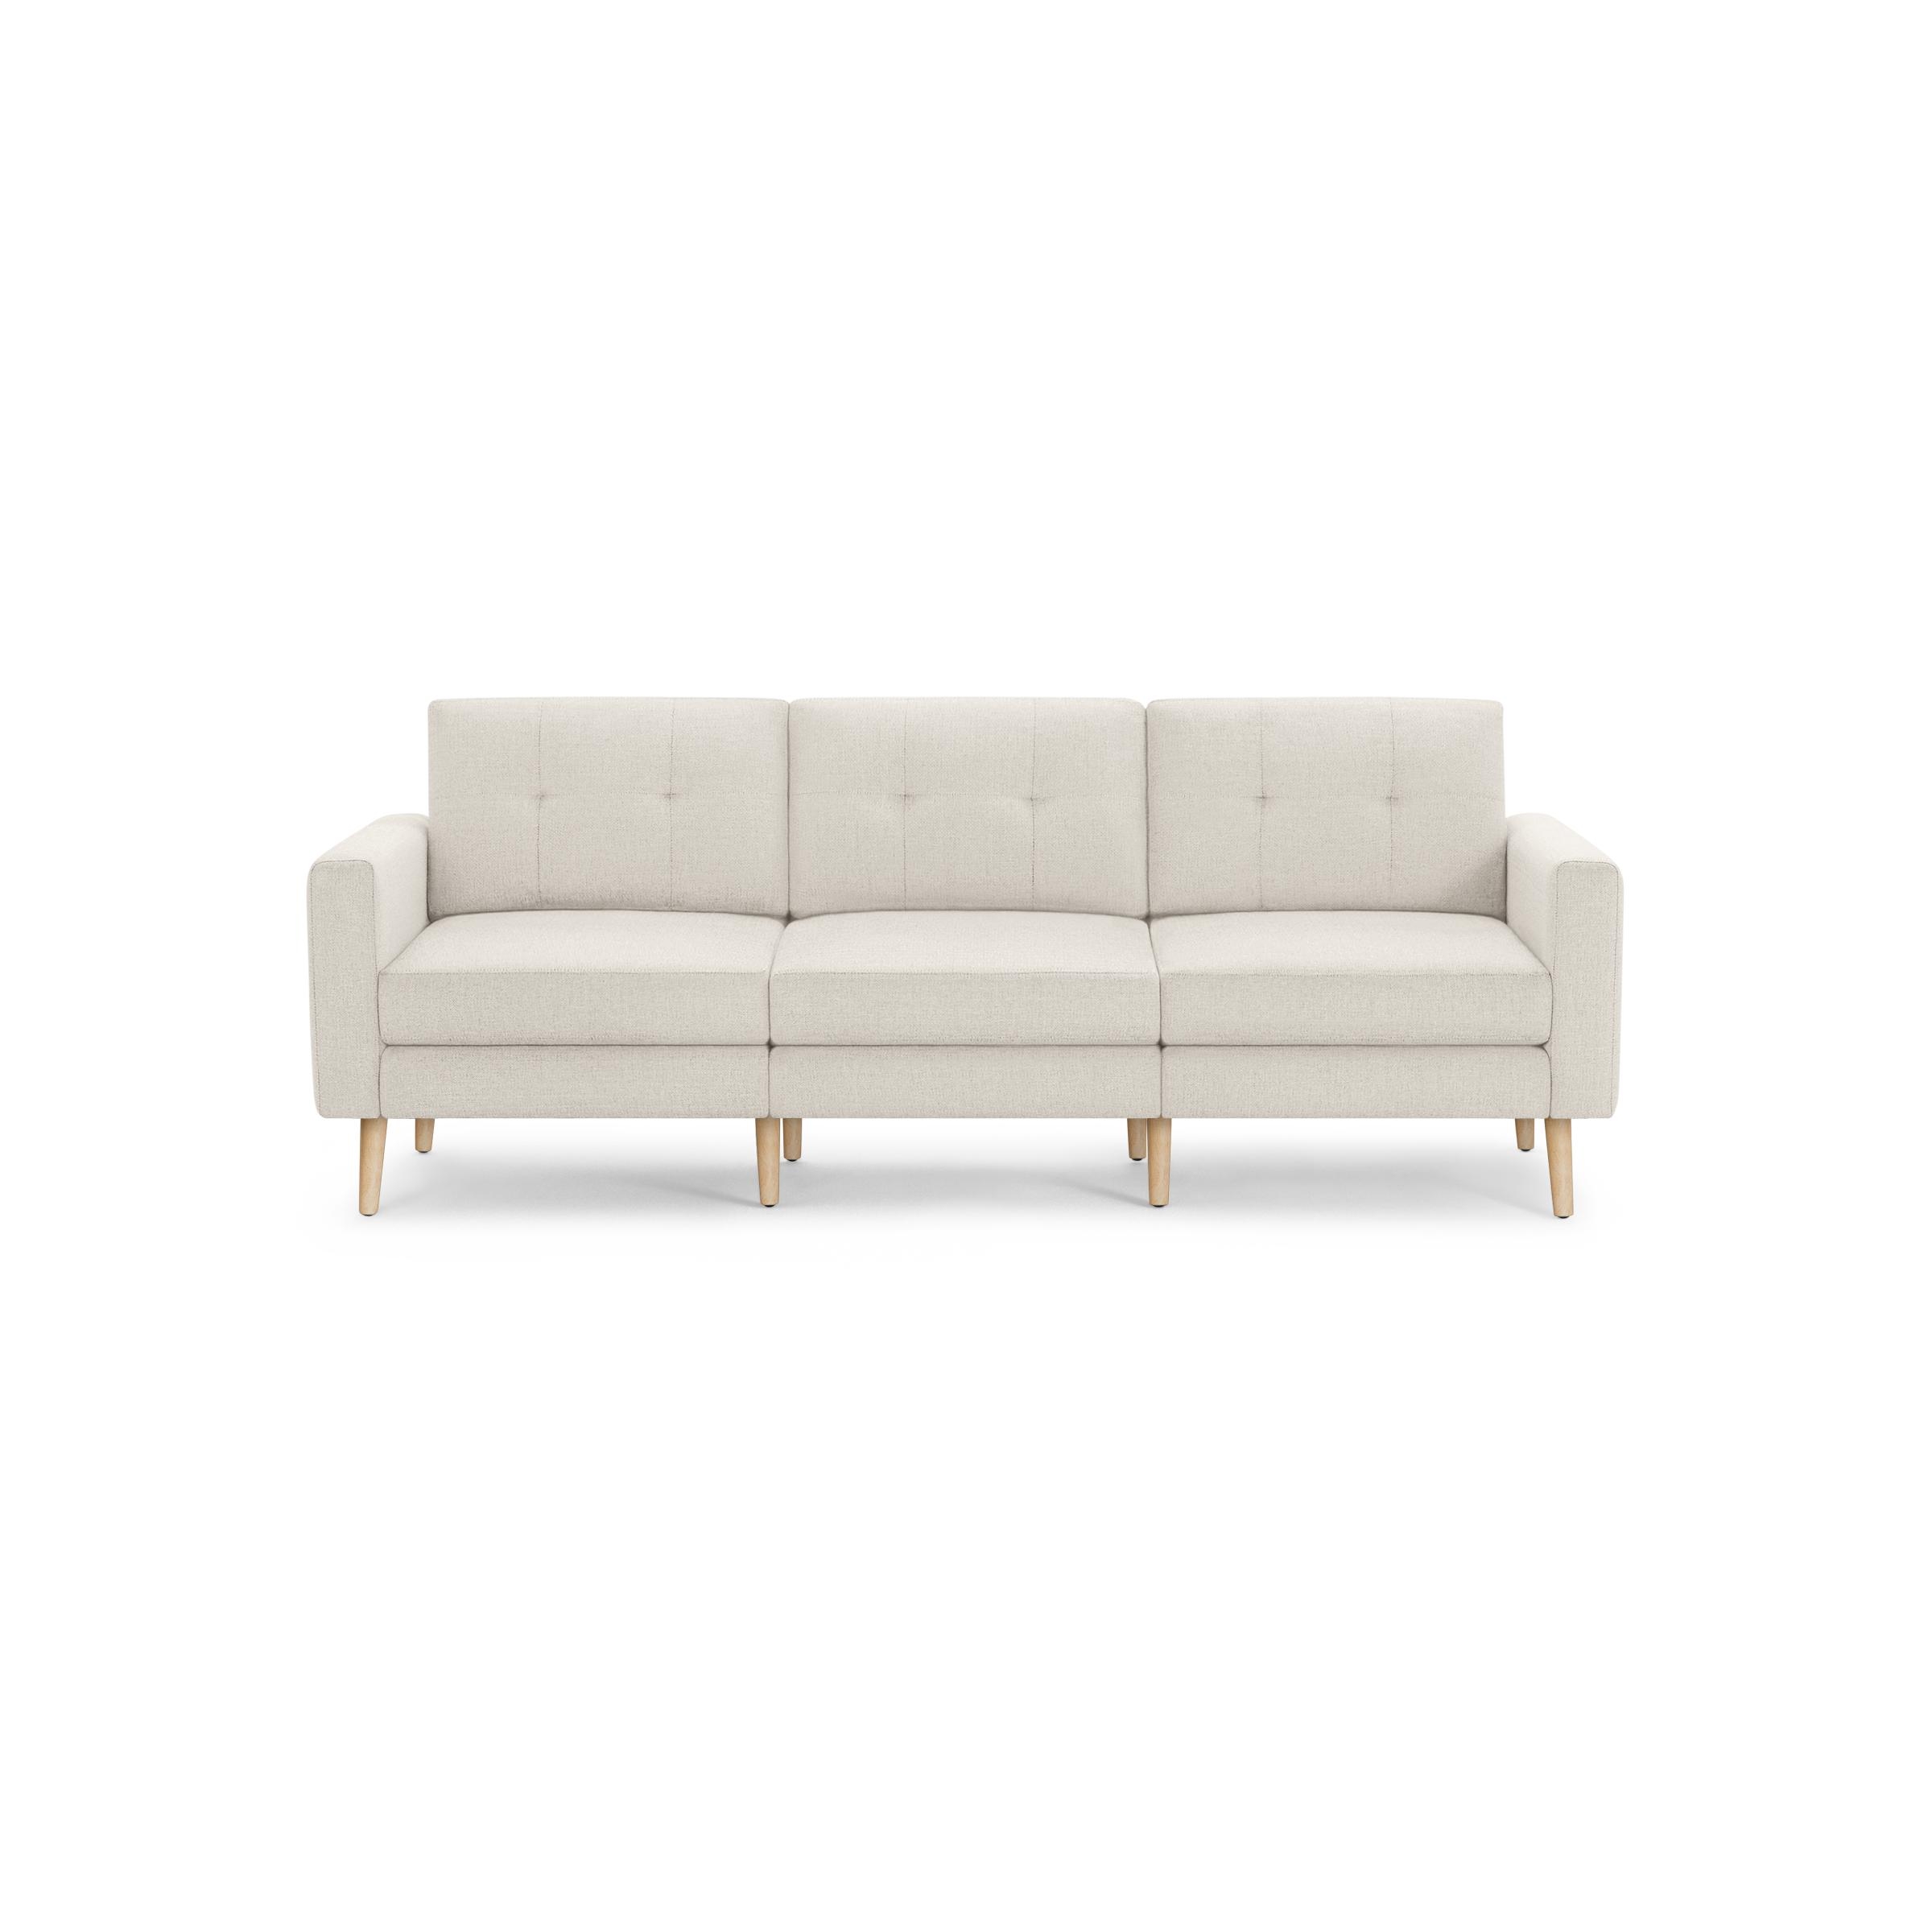 Nomad Sofa in Ivory, Oak Legs, Leg Finish: OakLegs - Image 0